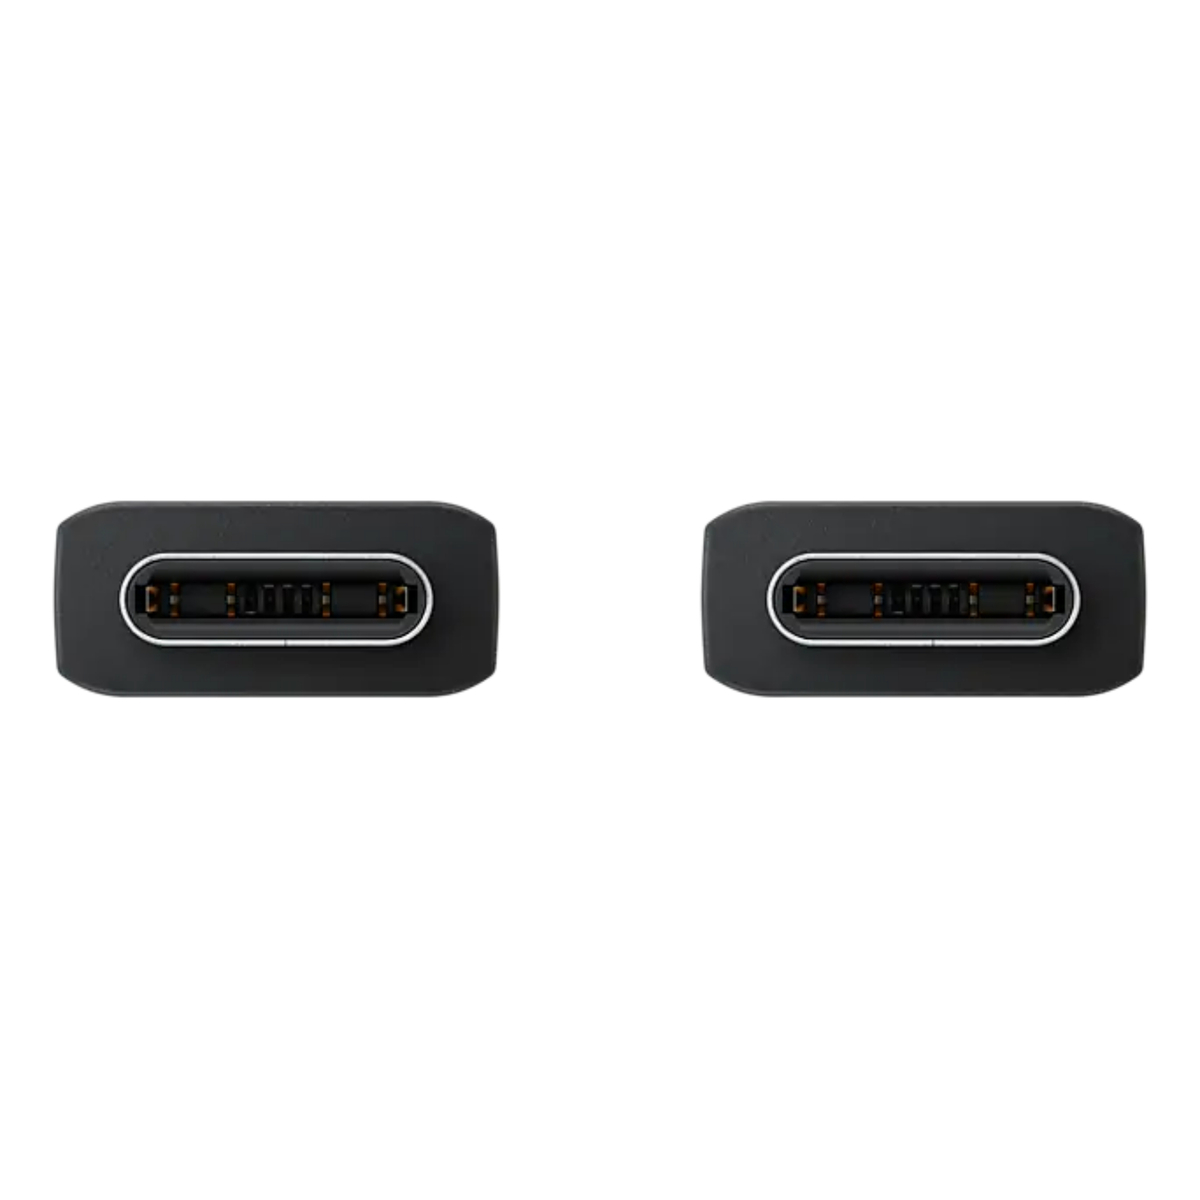 Samsung USB-C to USB-C Cable 3A, Black, EP-DX310JBEGWW